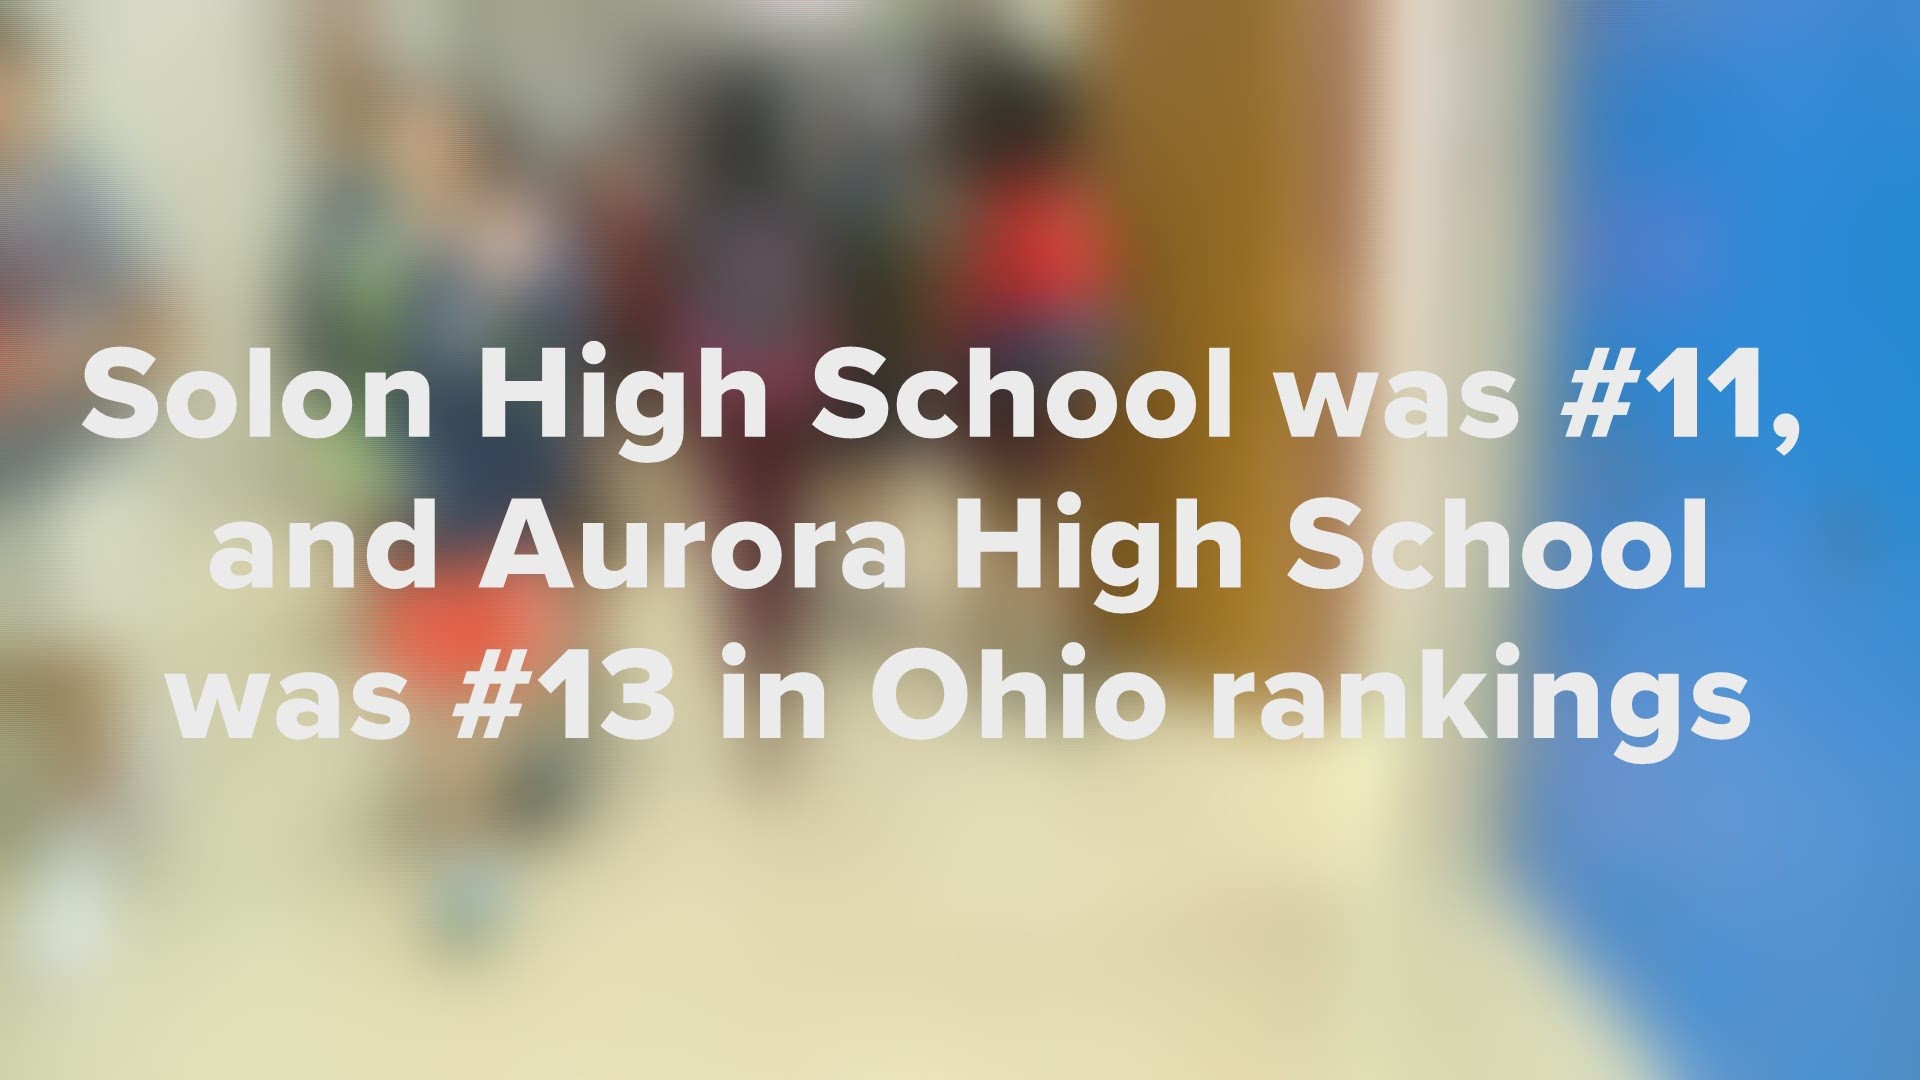 Ohio school rankings according to U.S. News and World Report